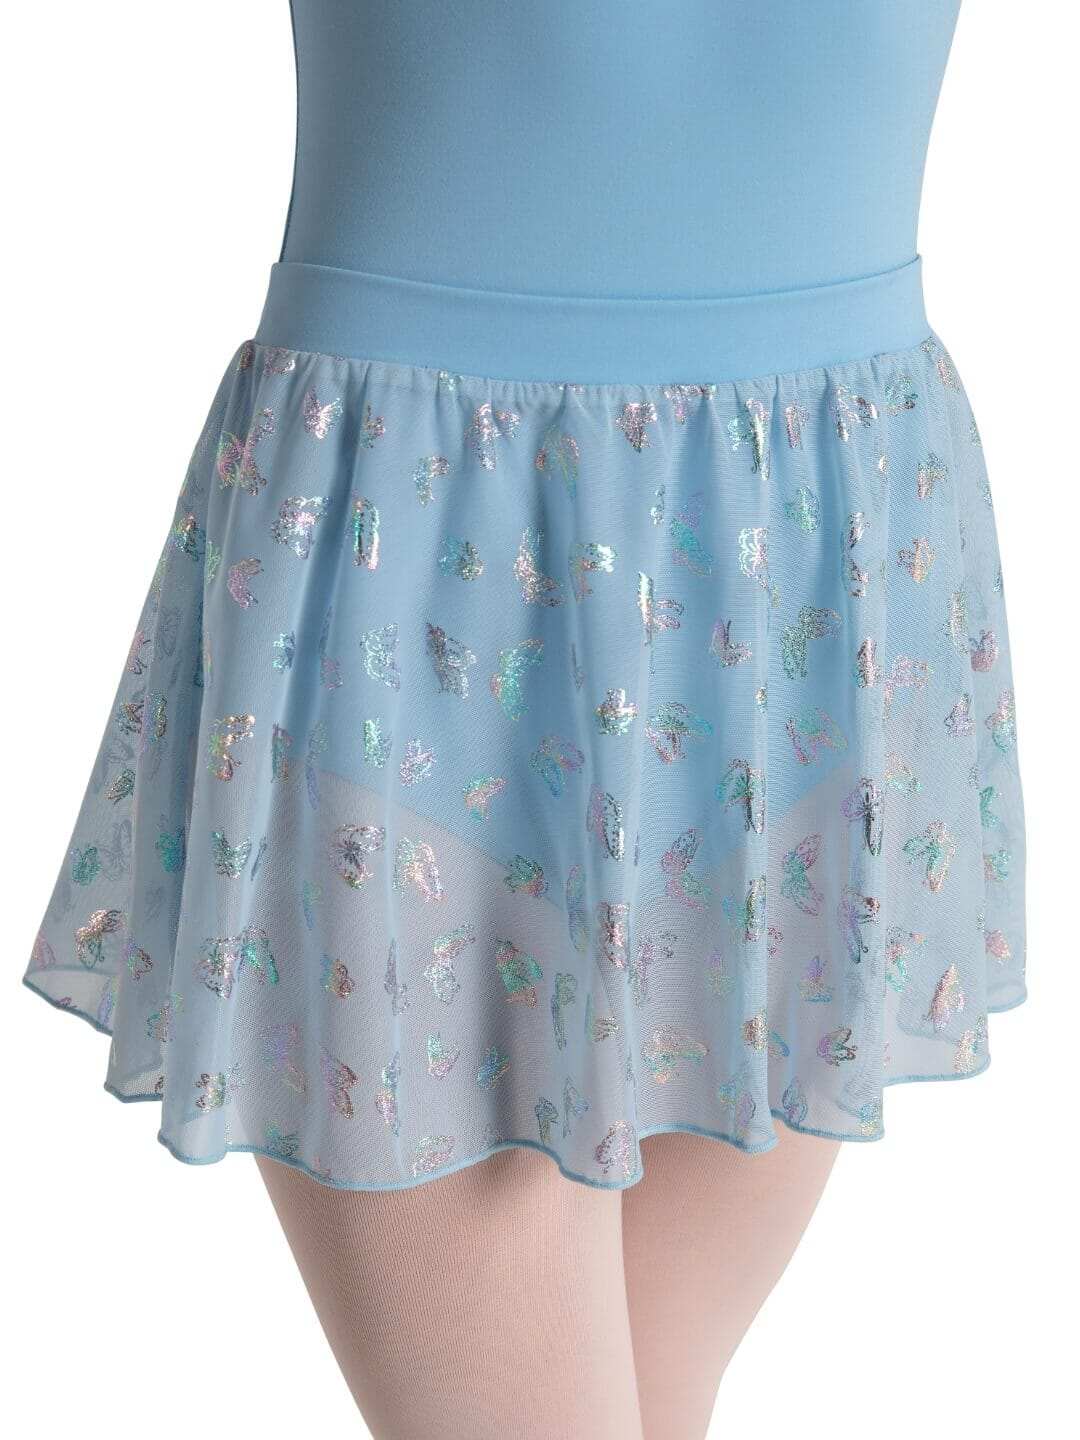 Social Butterfly Nova Skirt - Girls Bottoms Capezio Light Blue Child S 